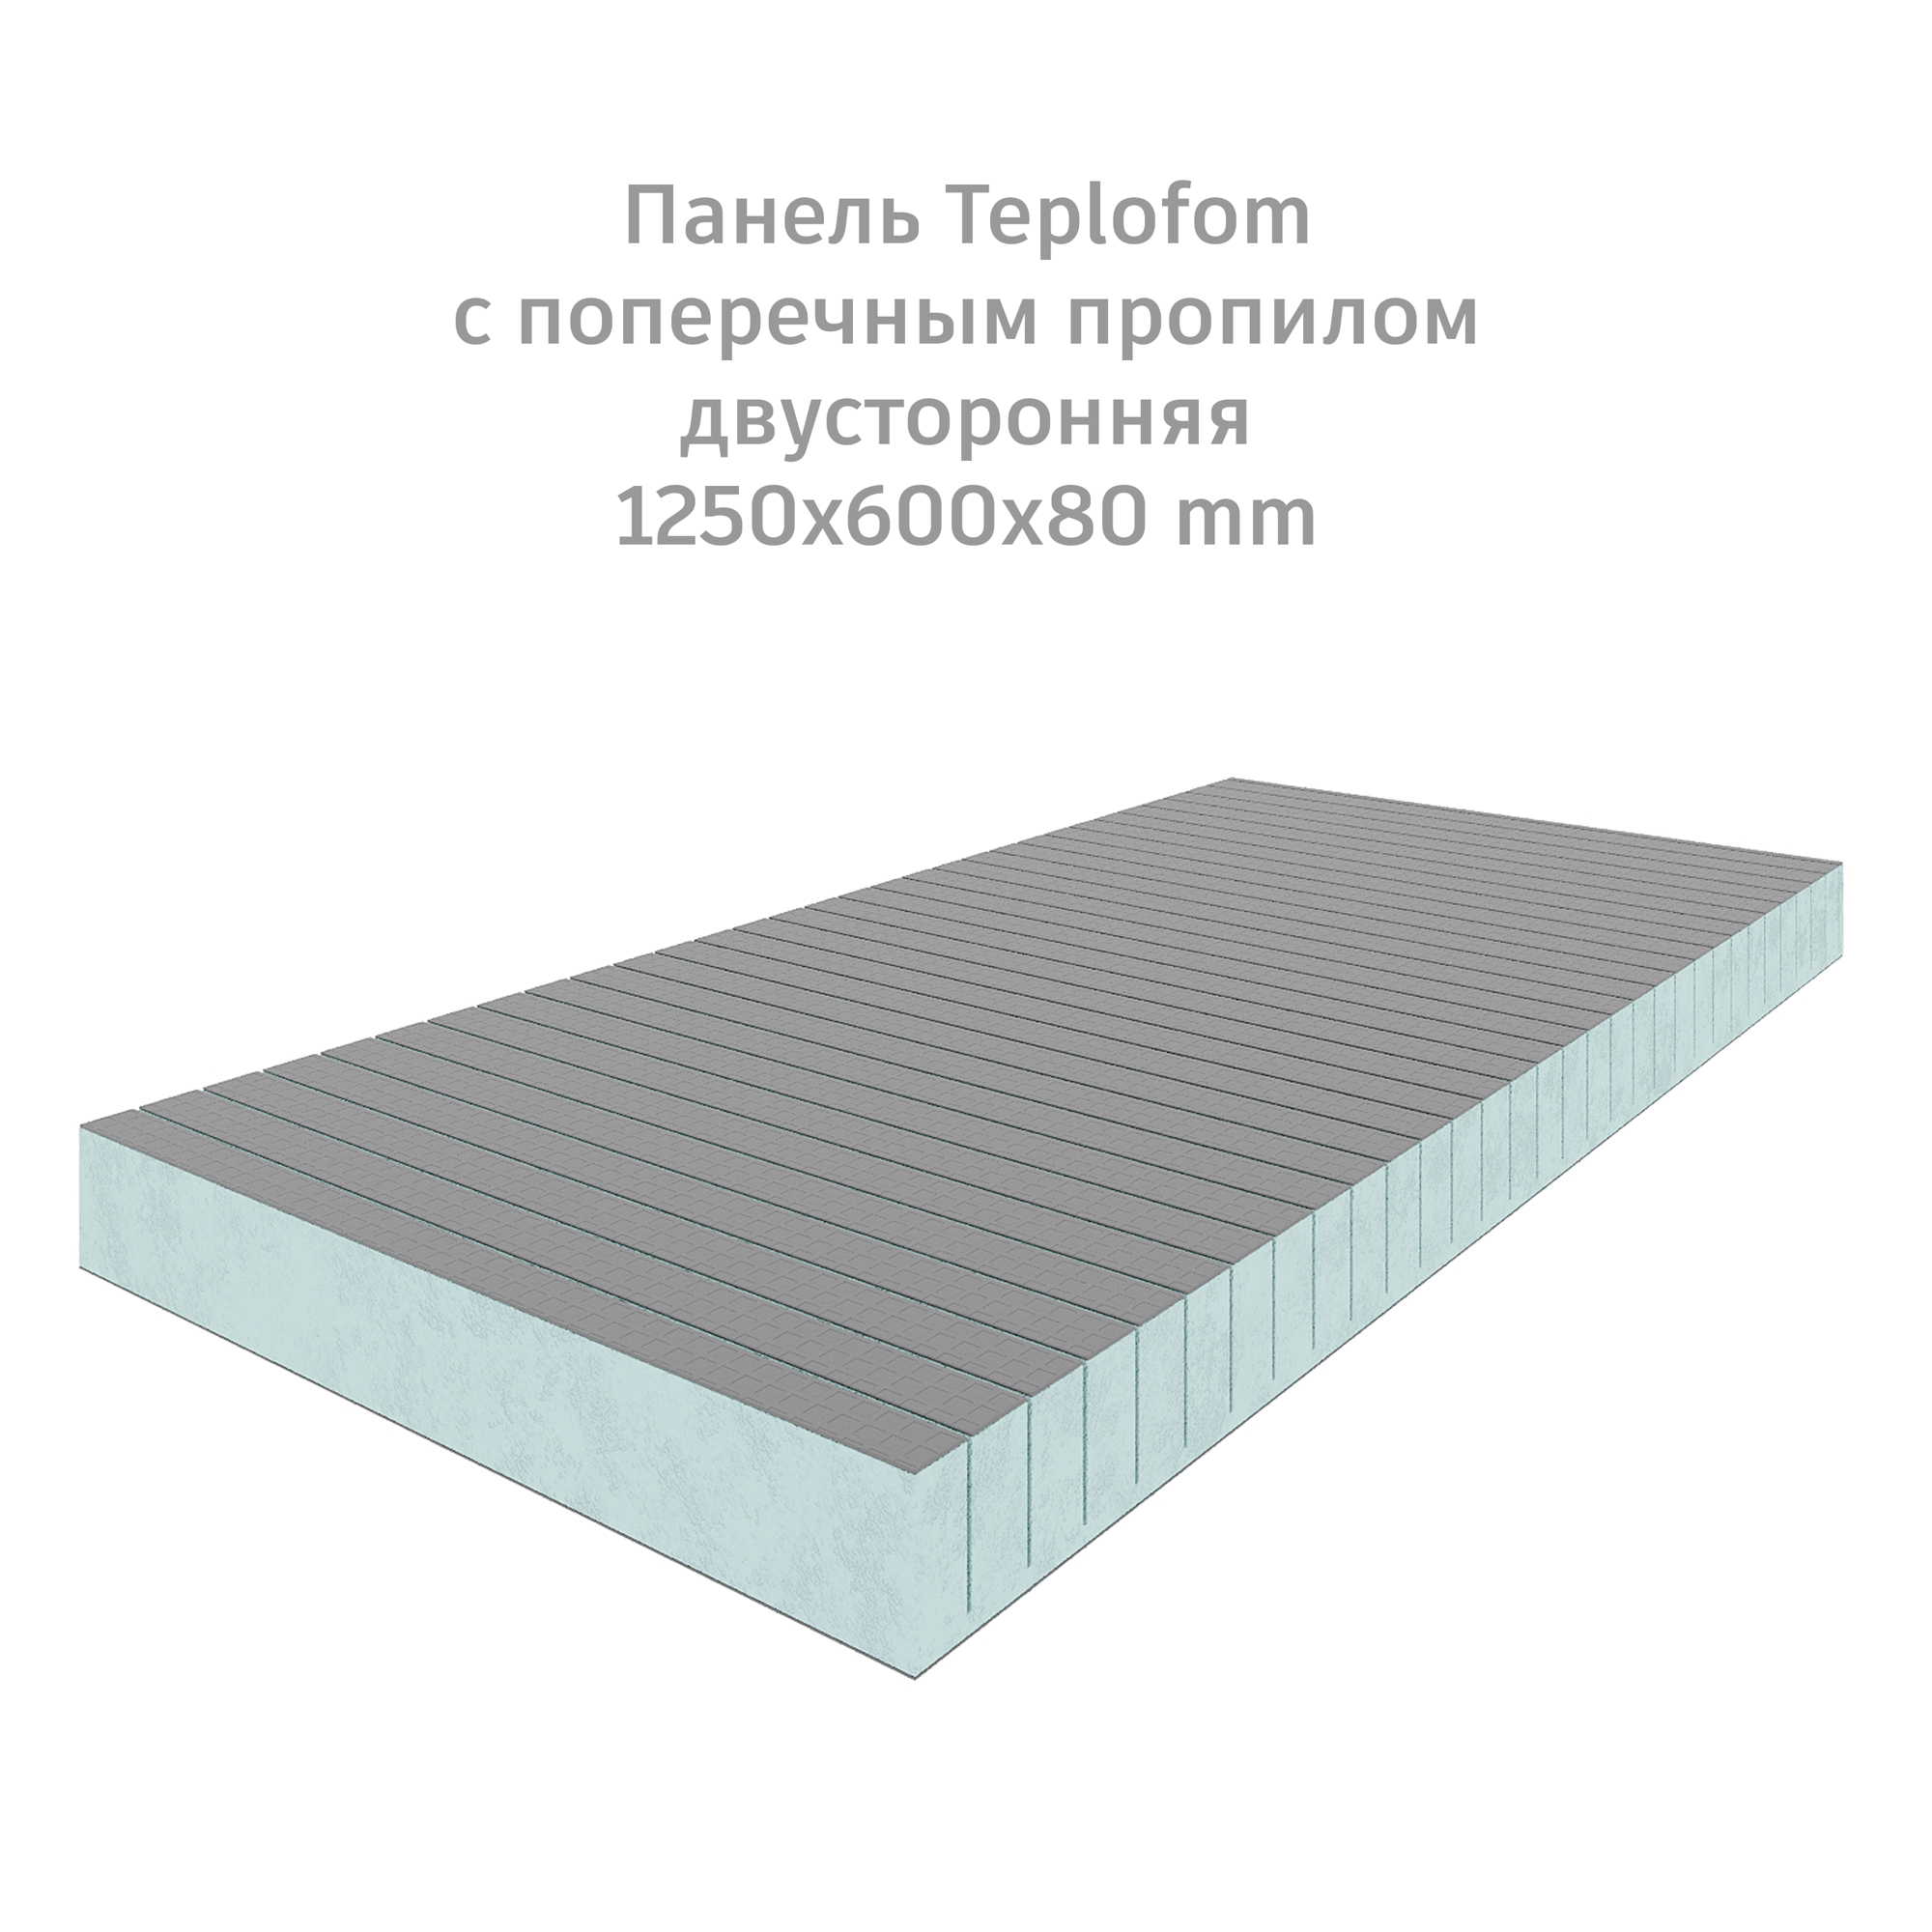 Теплоизоляционная панель TEPLOFOM+80 XPS-02 (двухсторонний слой) 1250x600x80мм поперечный